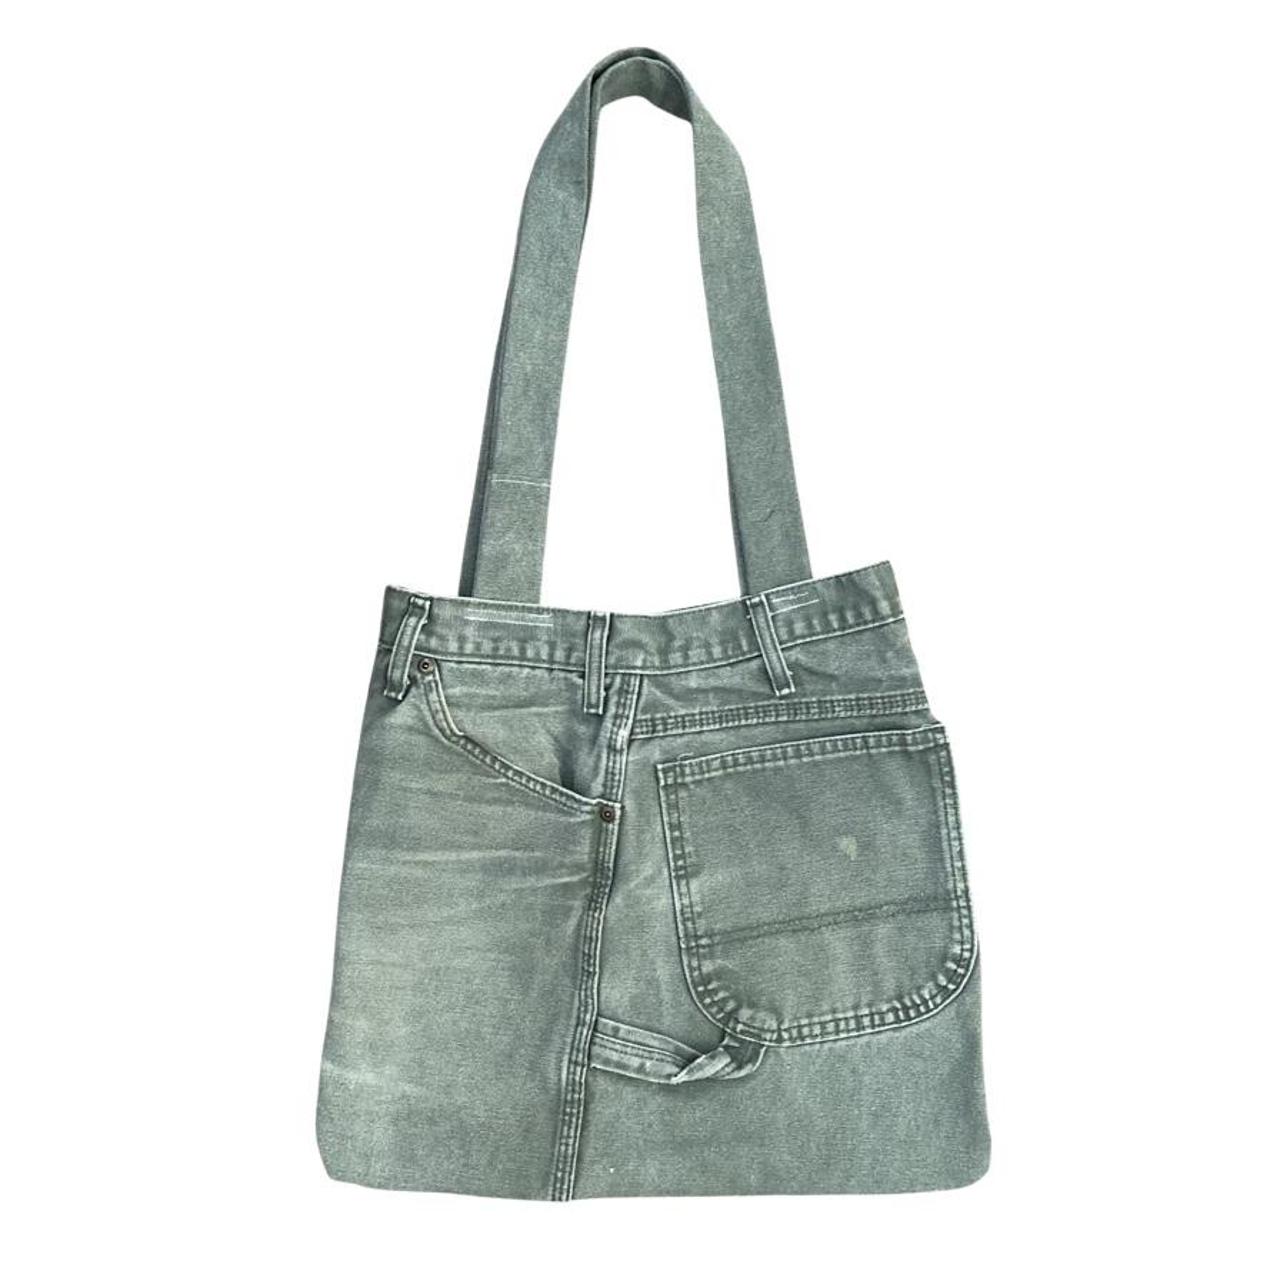 Dickies Women's Green and Khaki Bag (2)